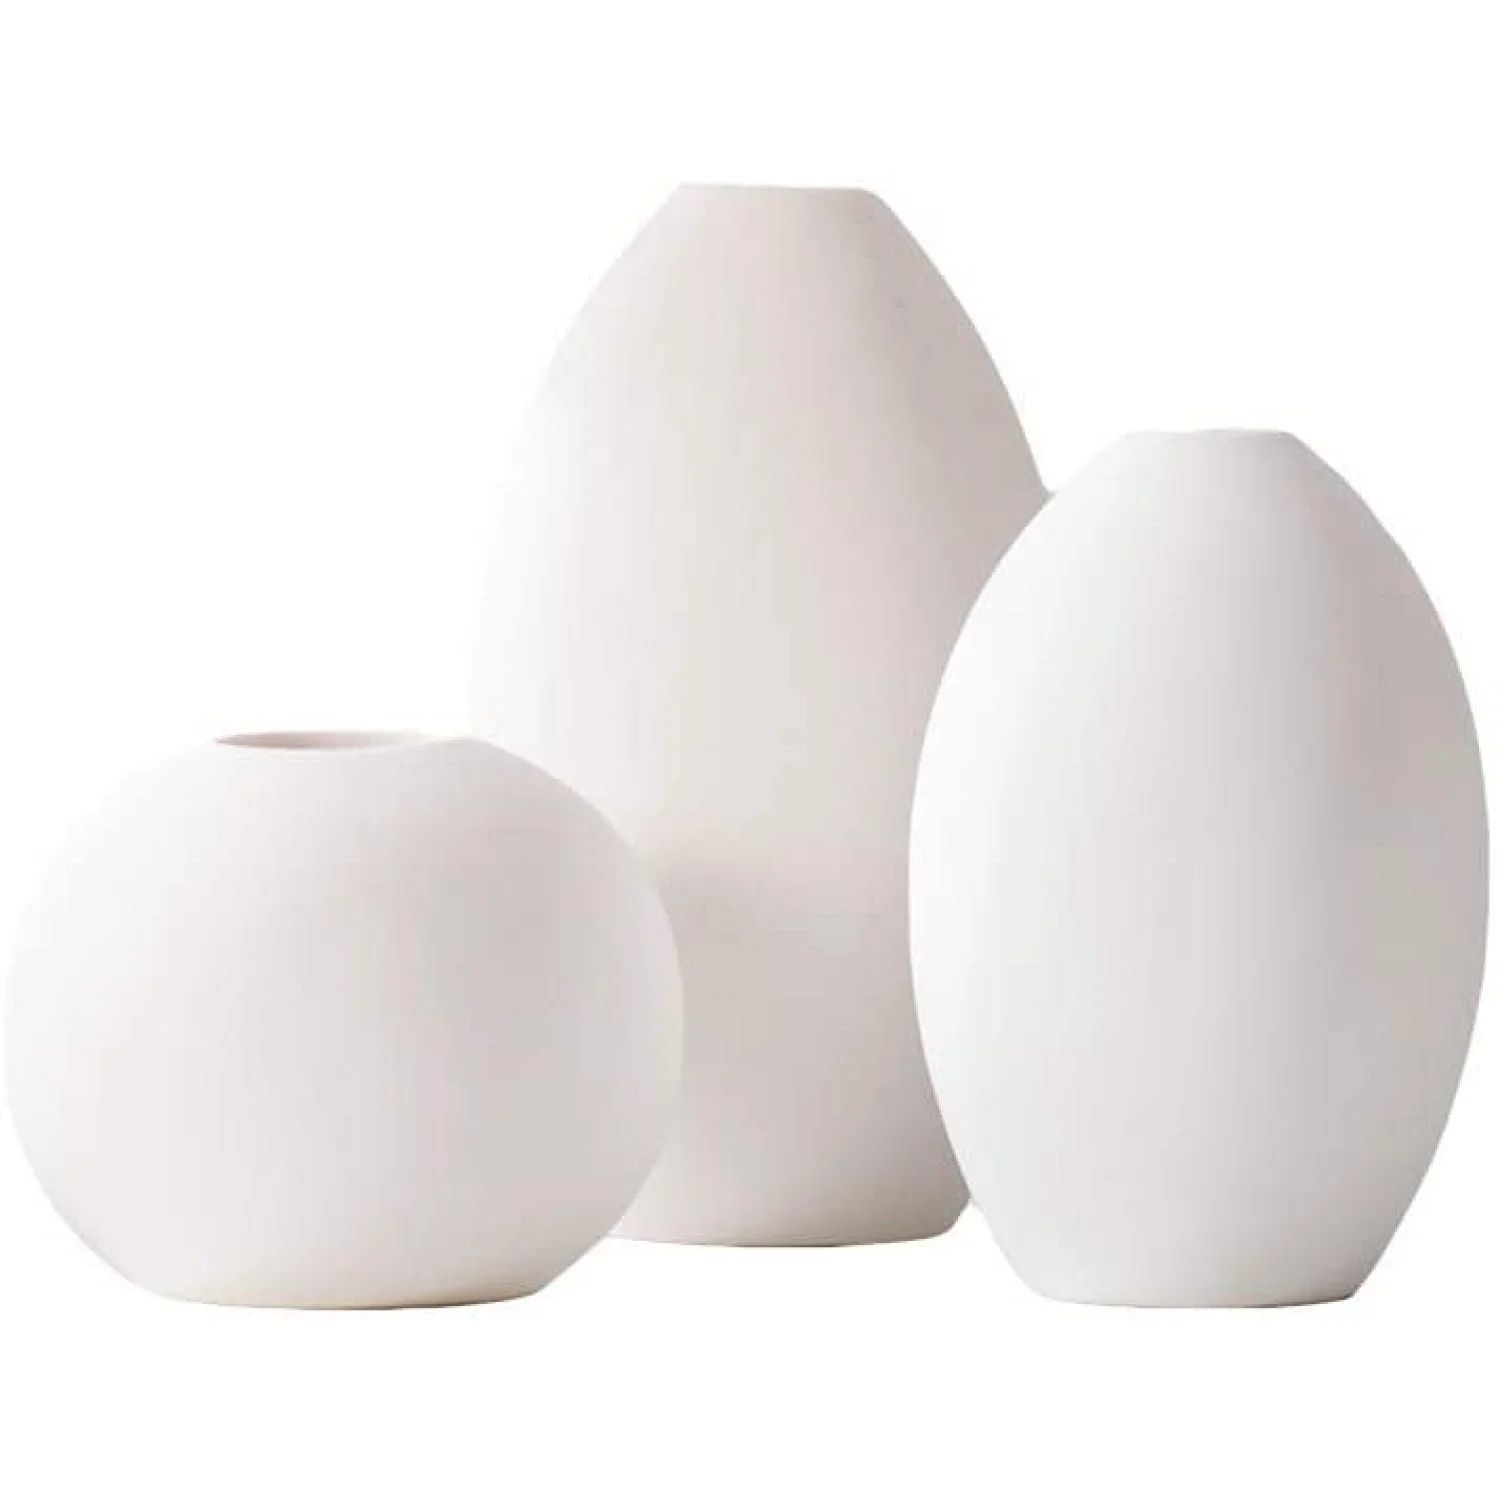 Small White Ceramic Vase Set For Home Decor -Set Of 3 (White) - Walmart.com | Walmart (US)